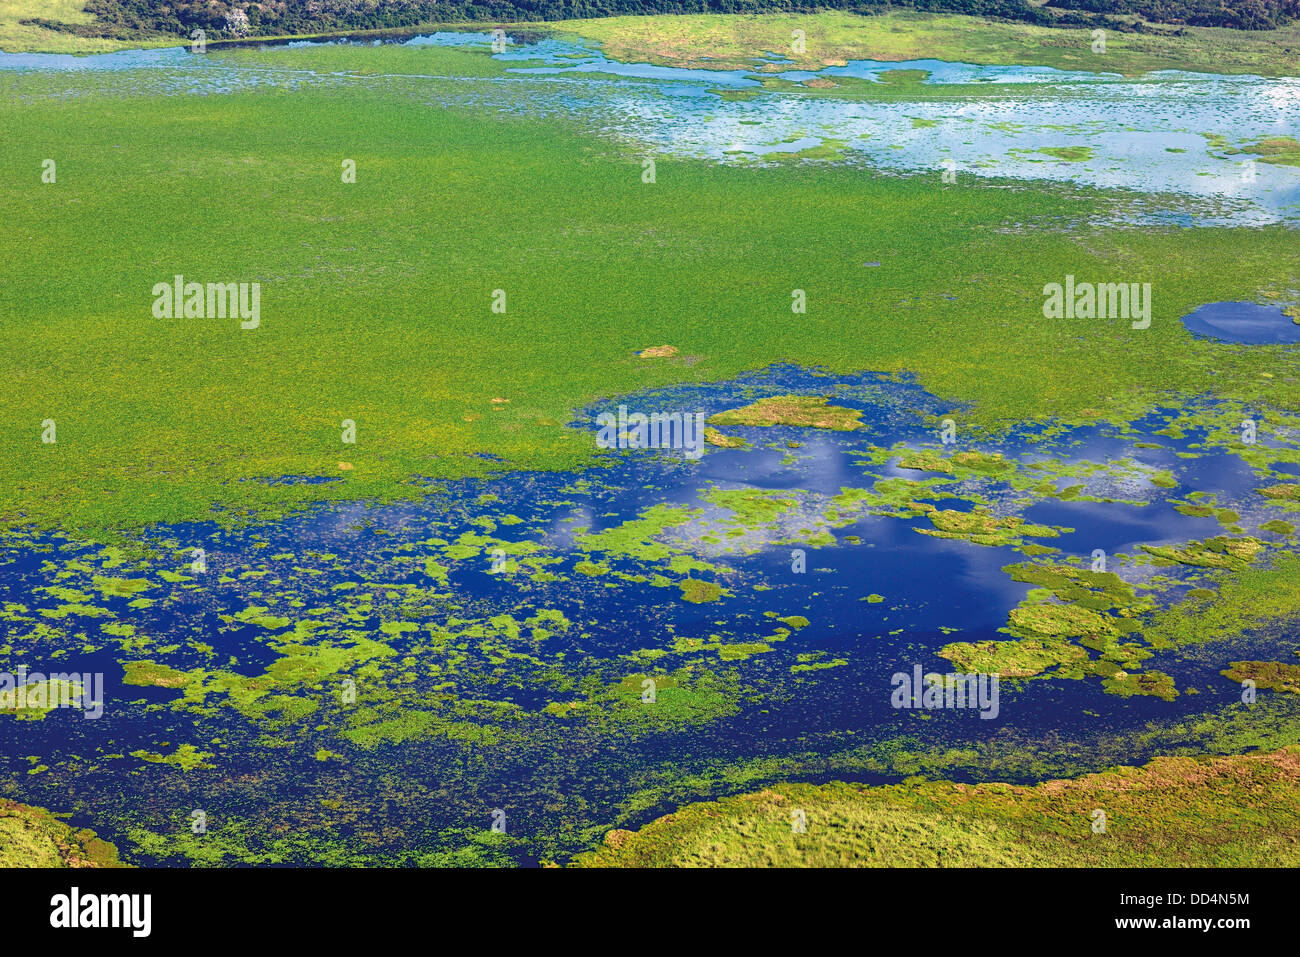 Il Brasile, Pantanal: vista panoramica da un piano per le zone umide del Pantanal matogrossense Foto Stock